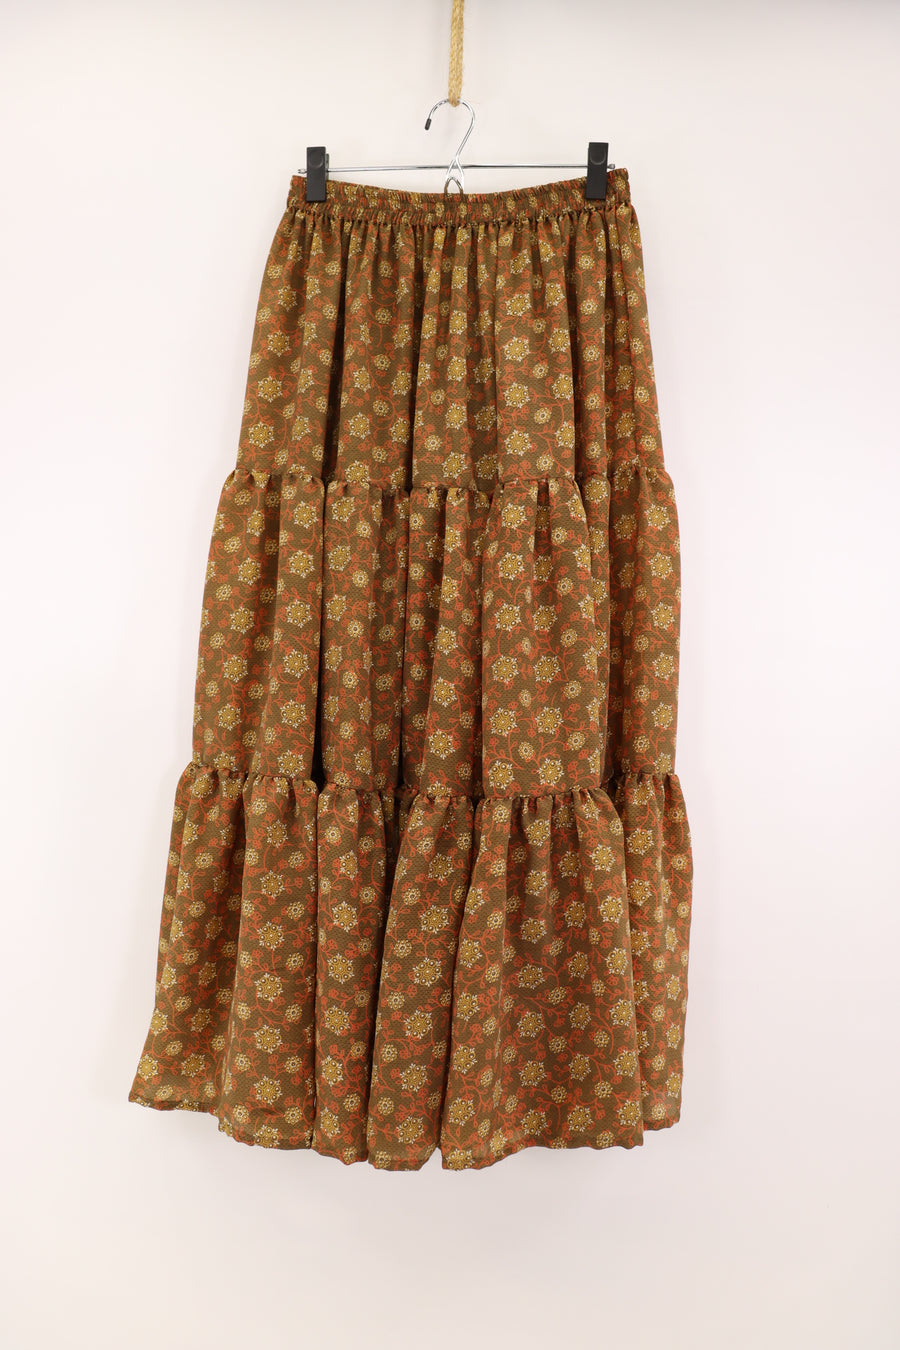 Meadow Skirt S/M 1530